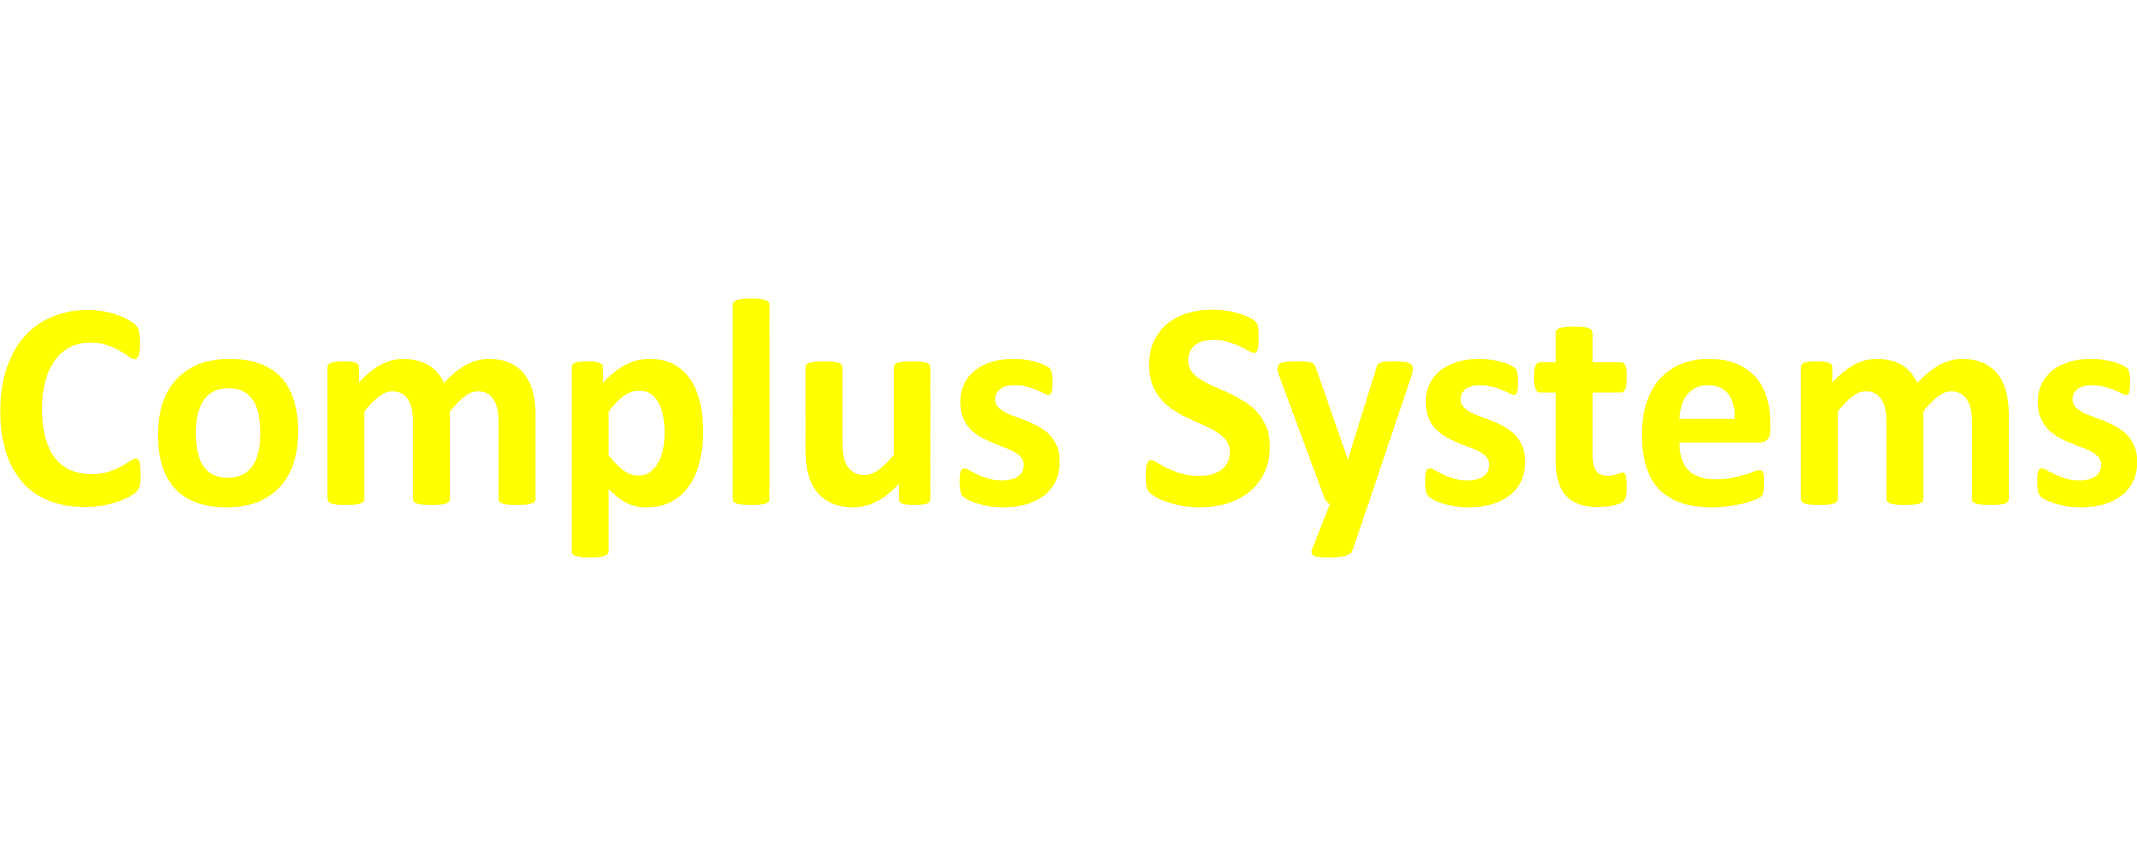 Complus Systems Grupp